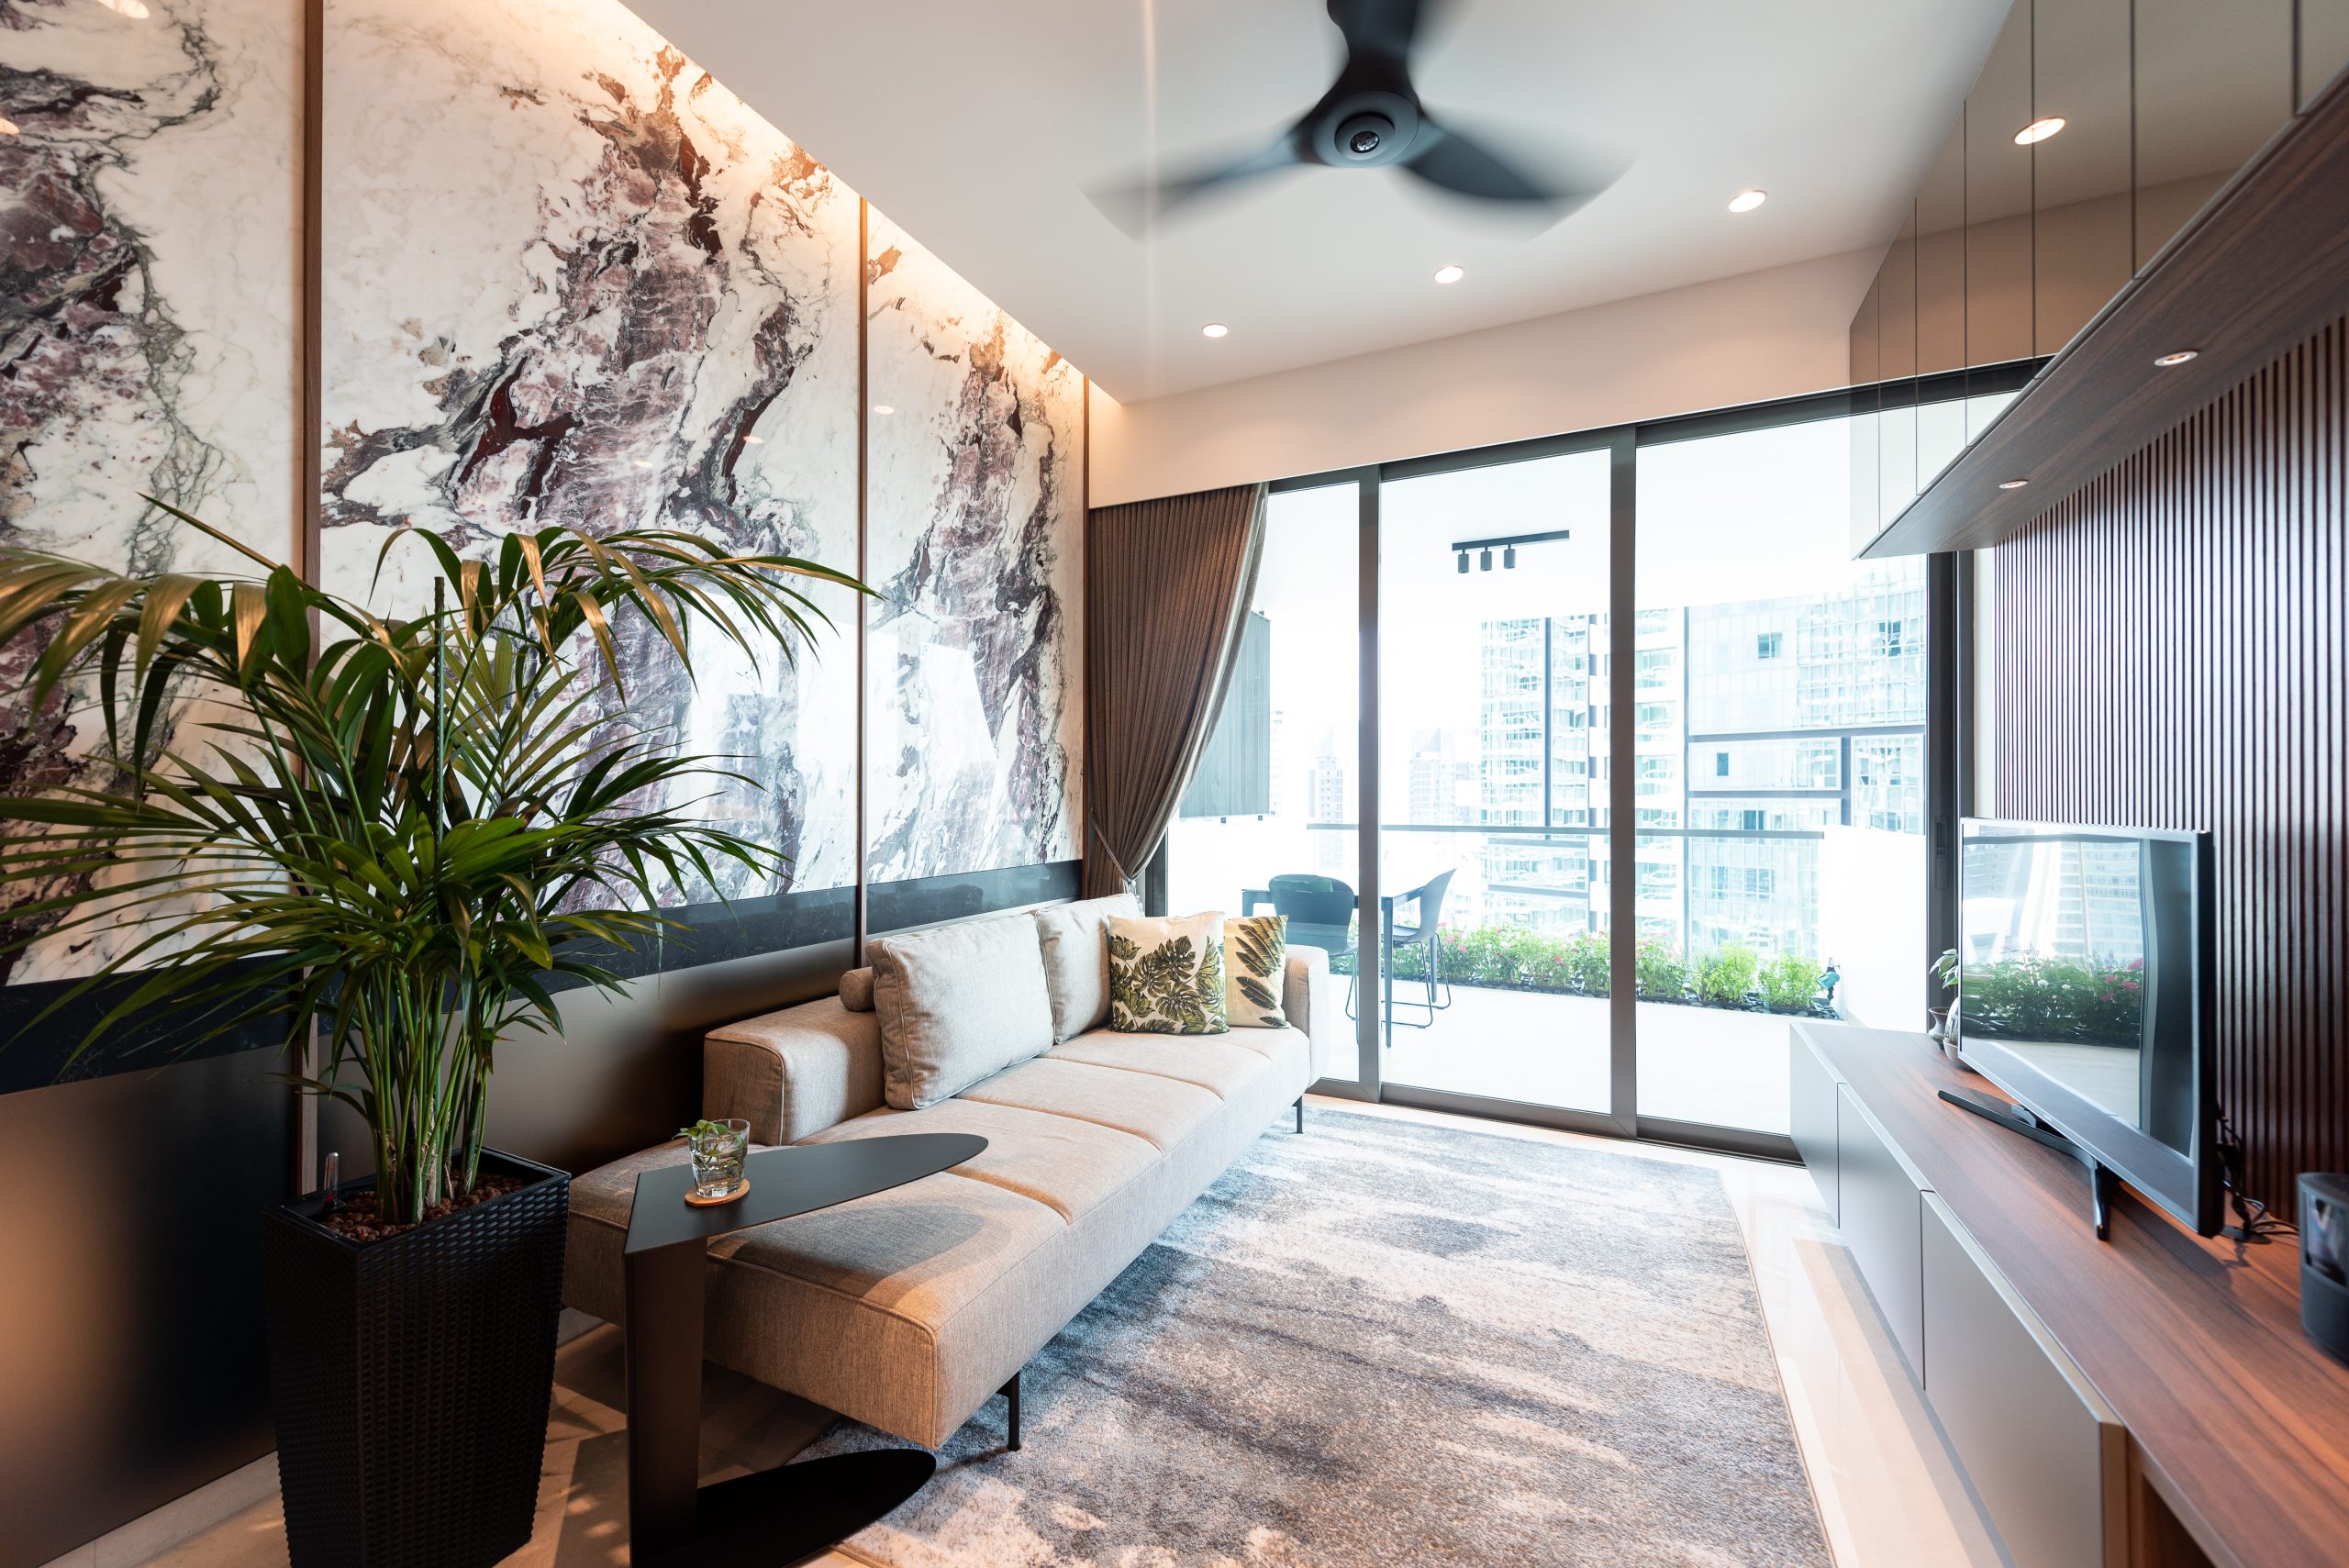 renovation idea luxury living room paintings plants bright